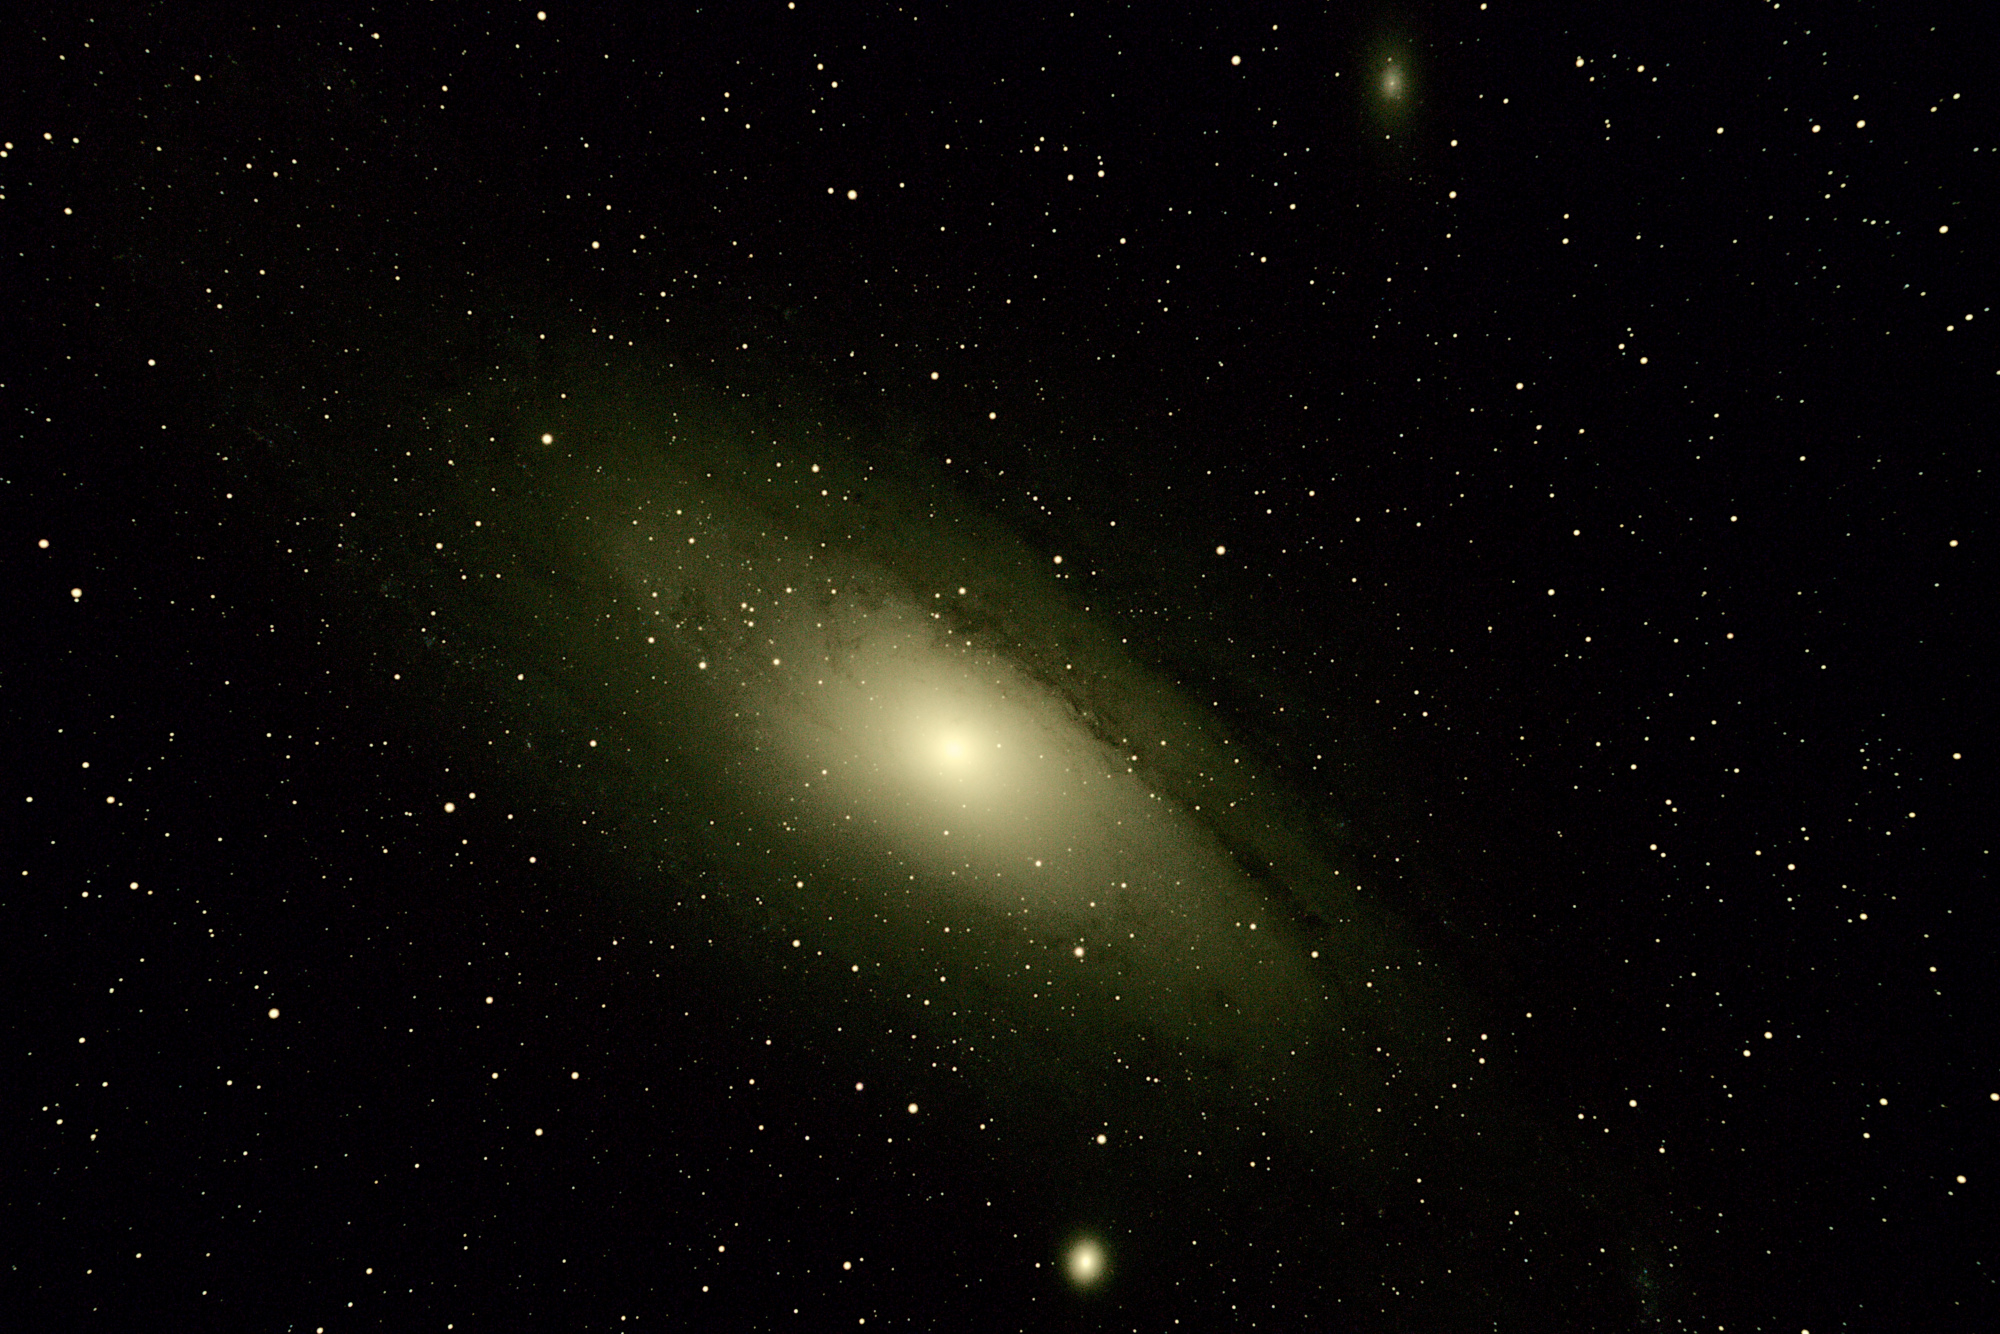 M31_2.jpg